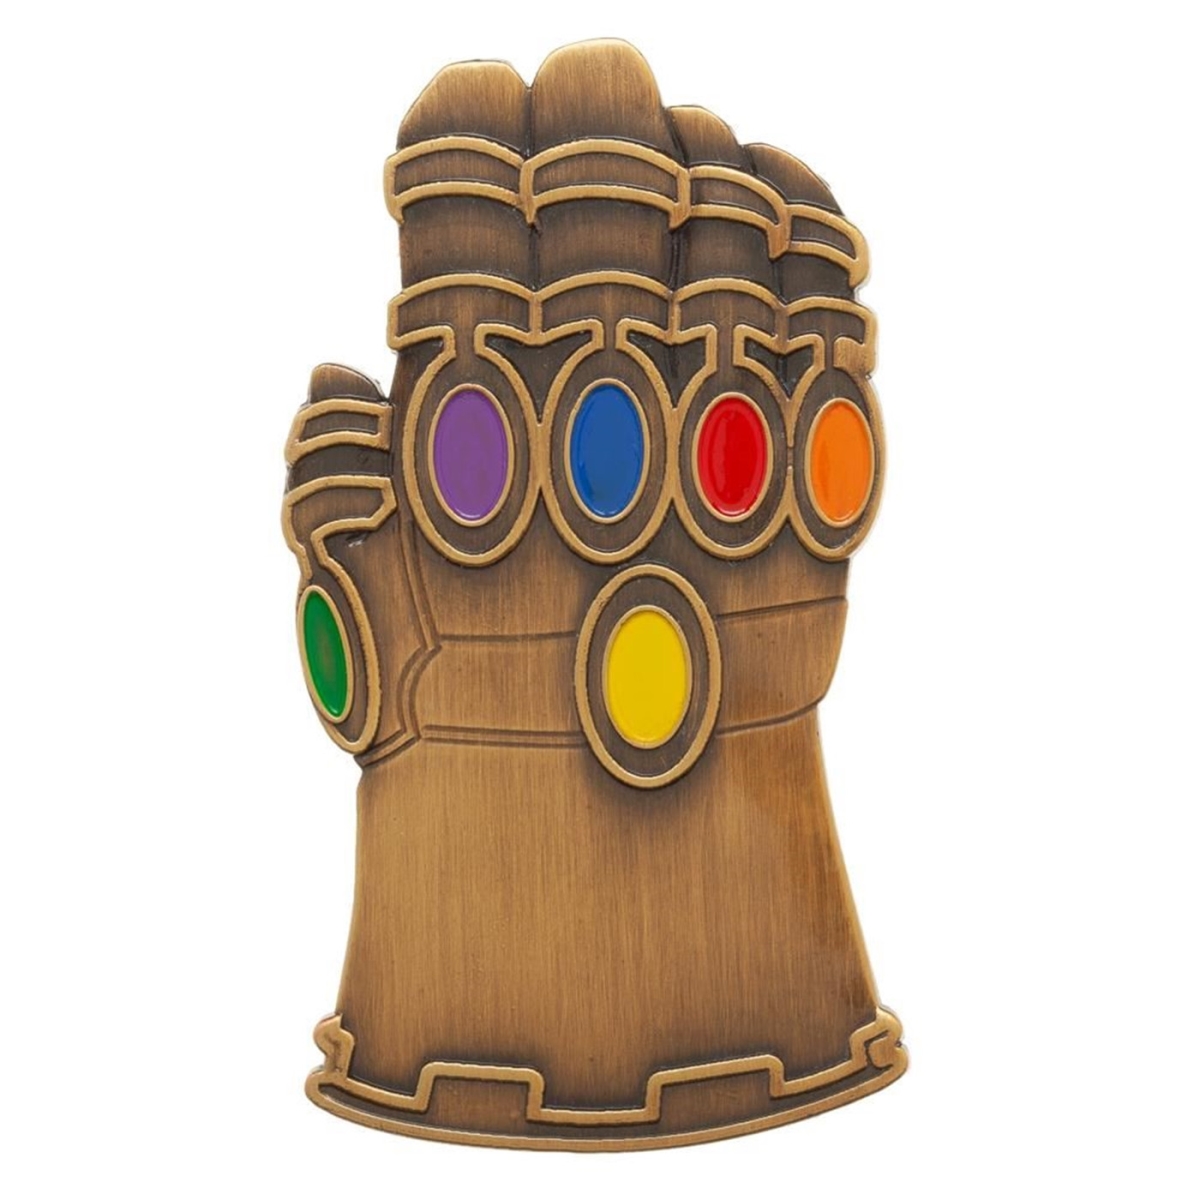 Picture of Avengers Endgame 111648 Avengers Endgame Thanos Infinity Gauntlet Pin